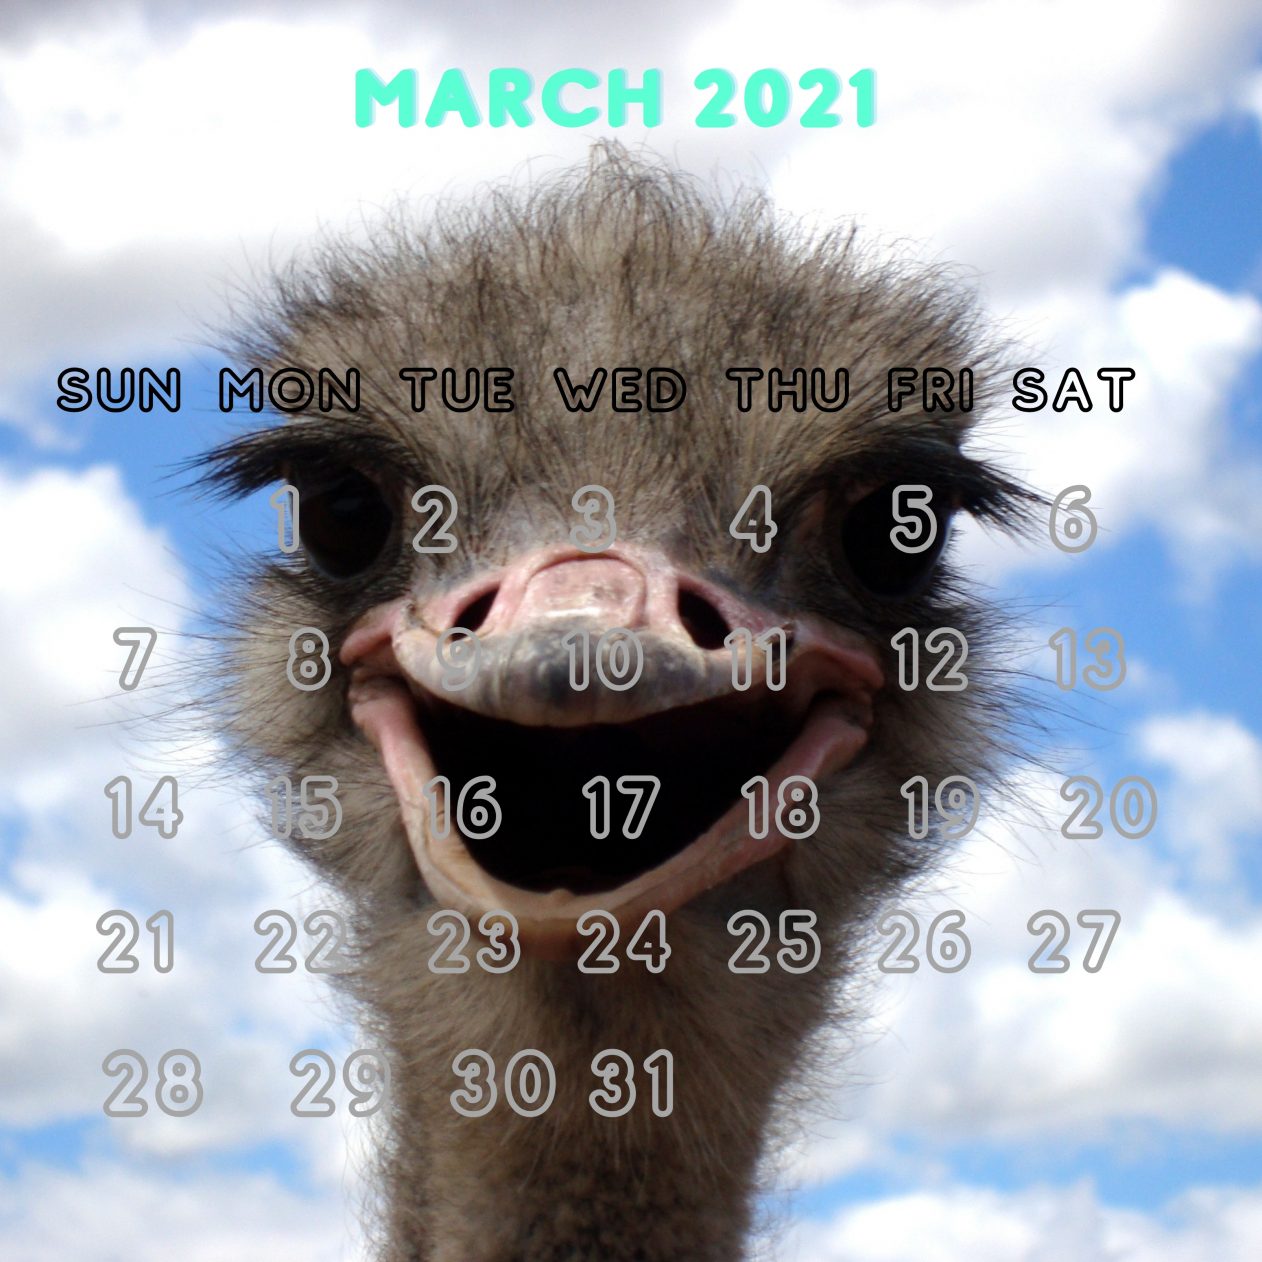 1262x1262 Parallax wallpaper 4k March 2021 Ostrich Smiling iPad Wallpaper 1262x1262 pixels resolution